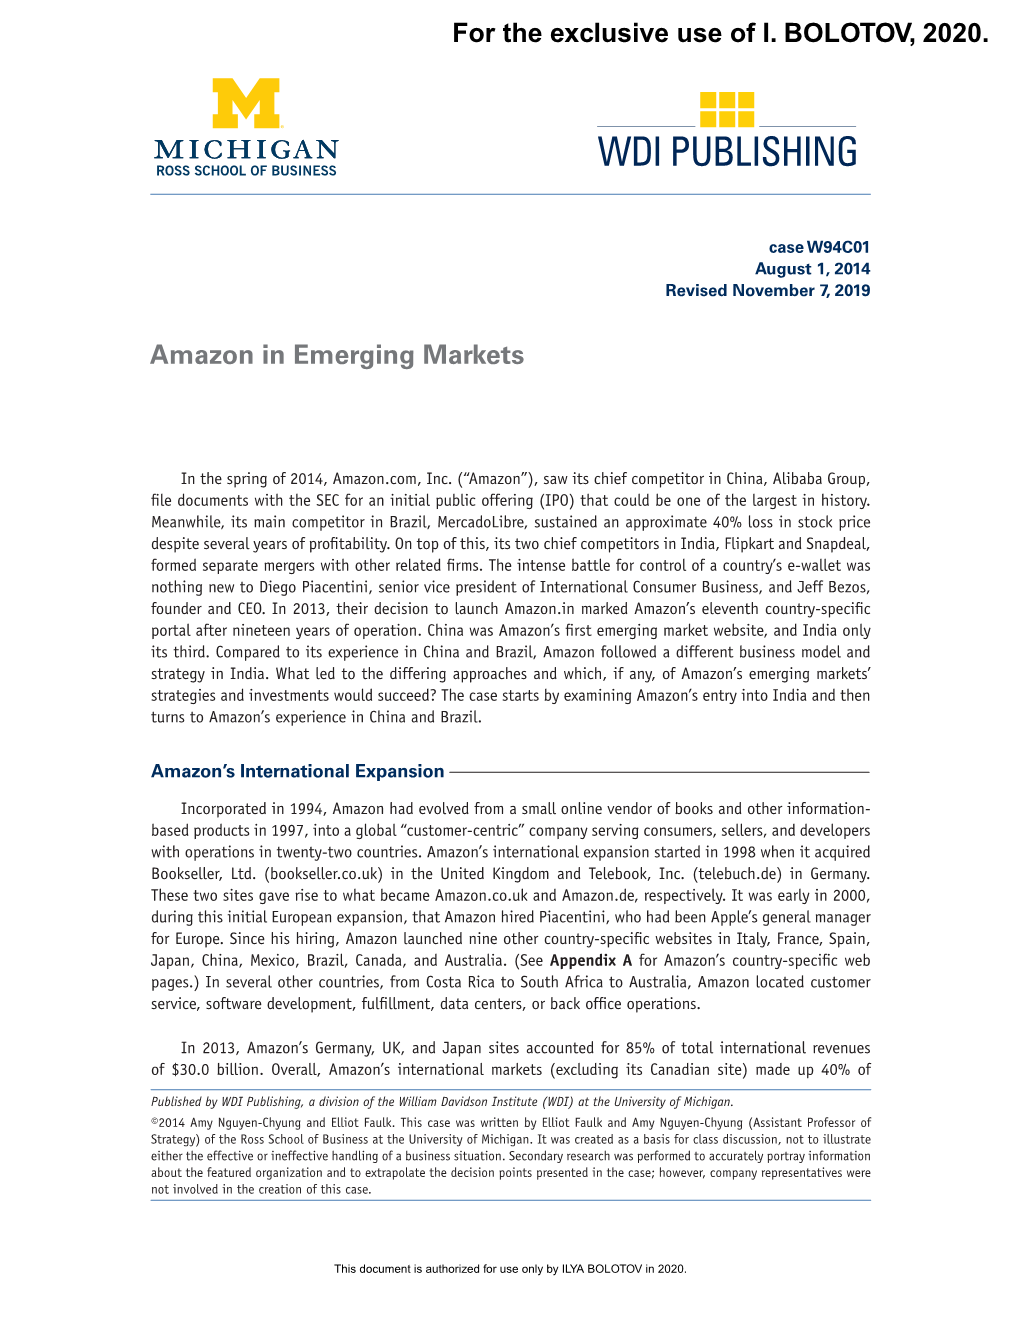 Amazon in Emerging Markets